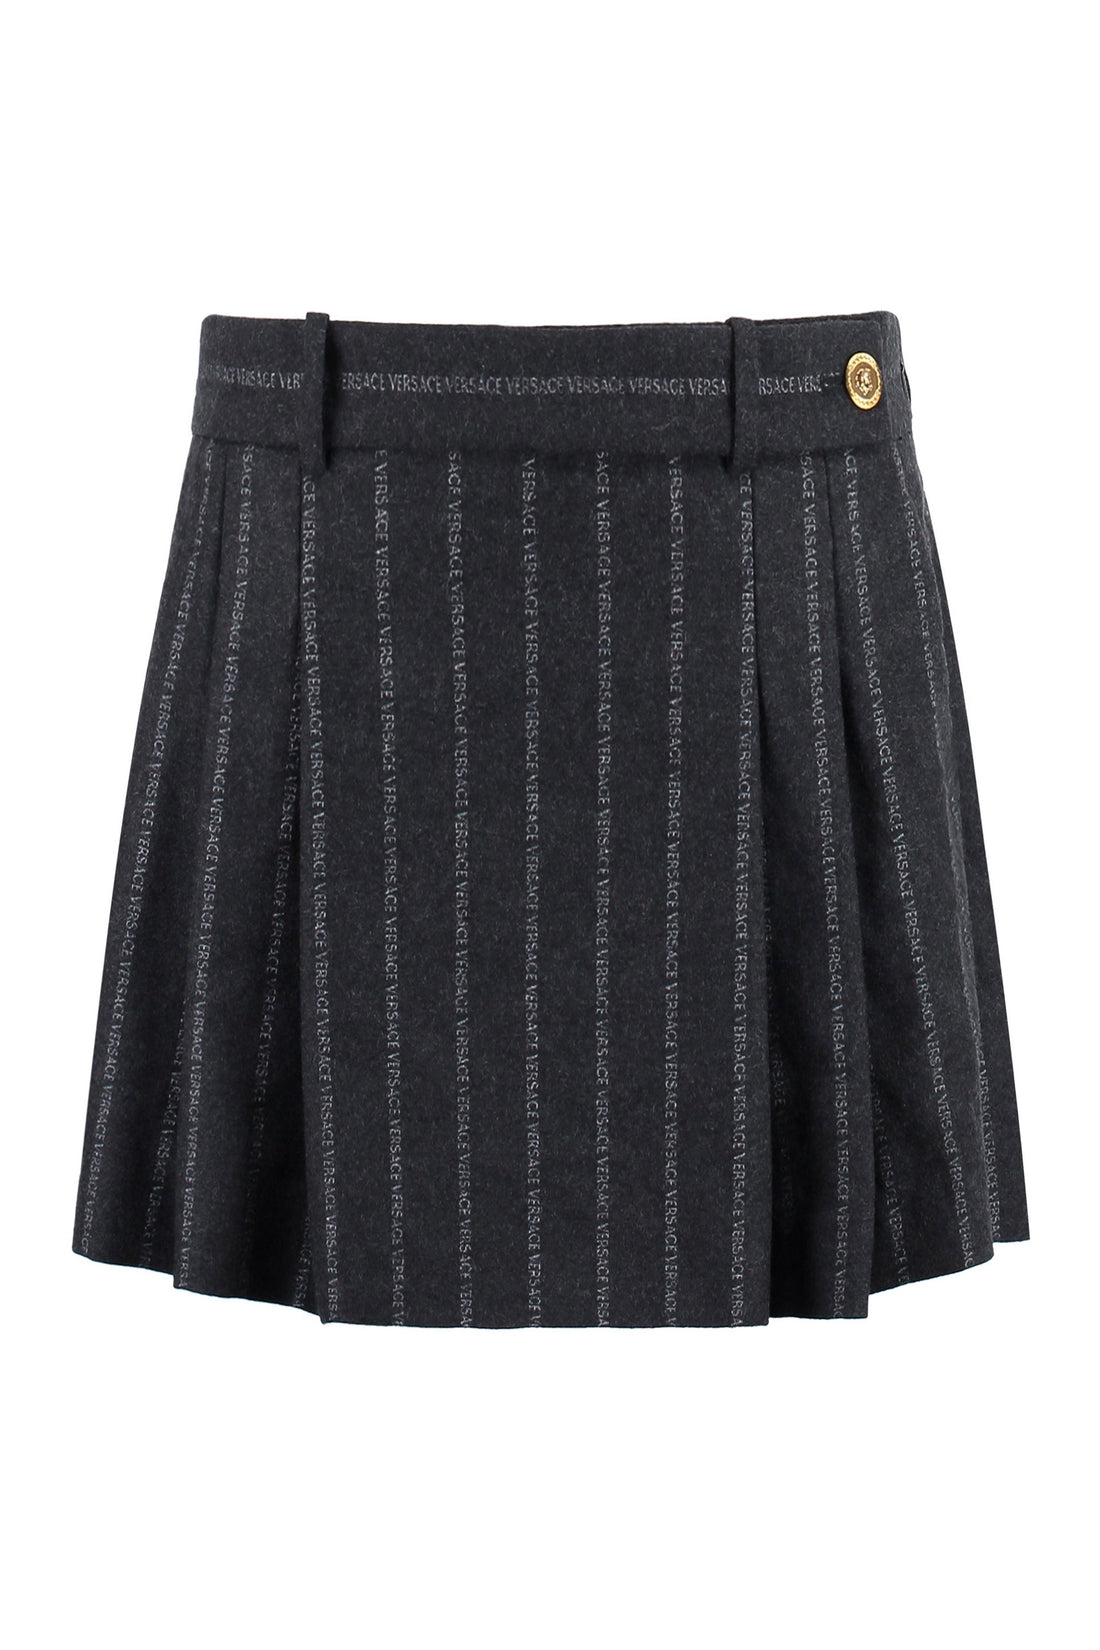 Versace-OUTLET-SALE-Pleated mini skirt-ARCHIVIST